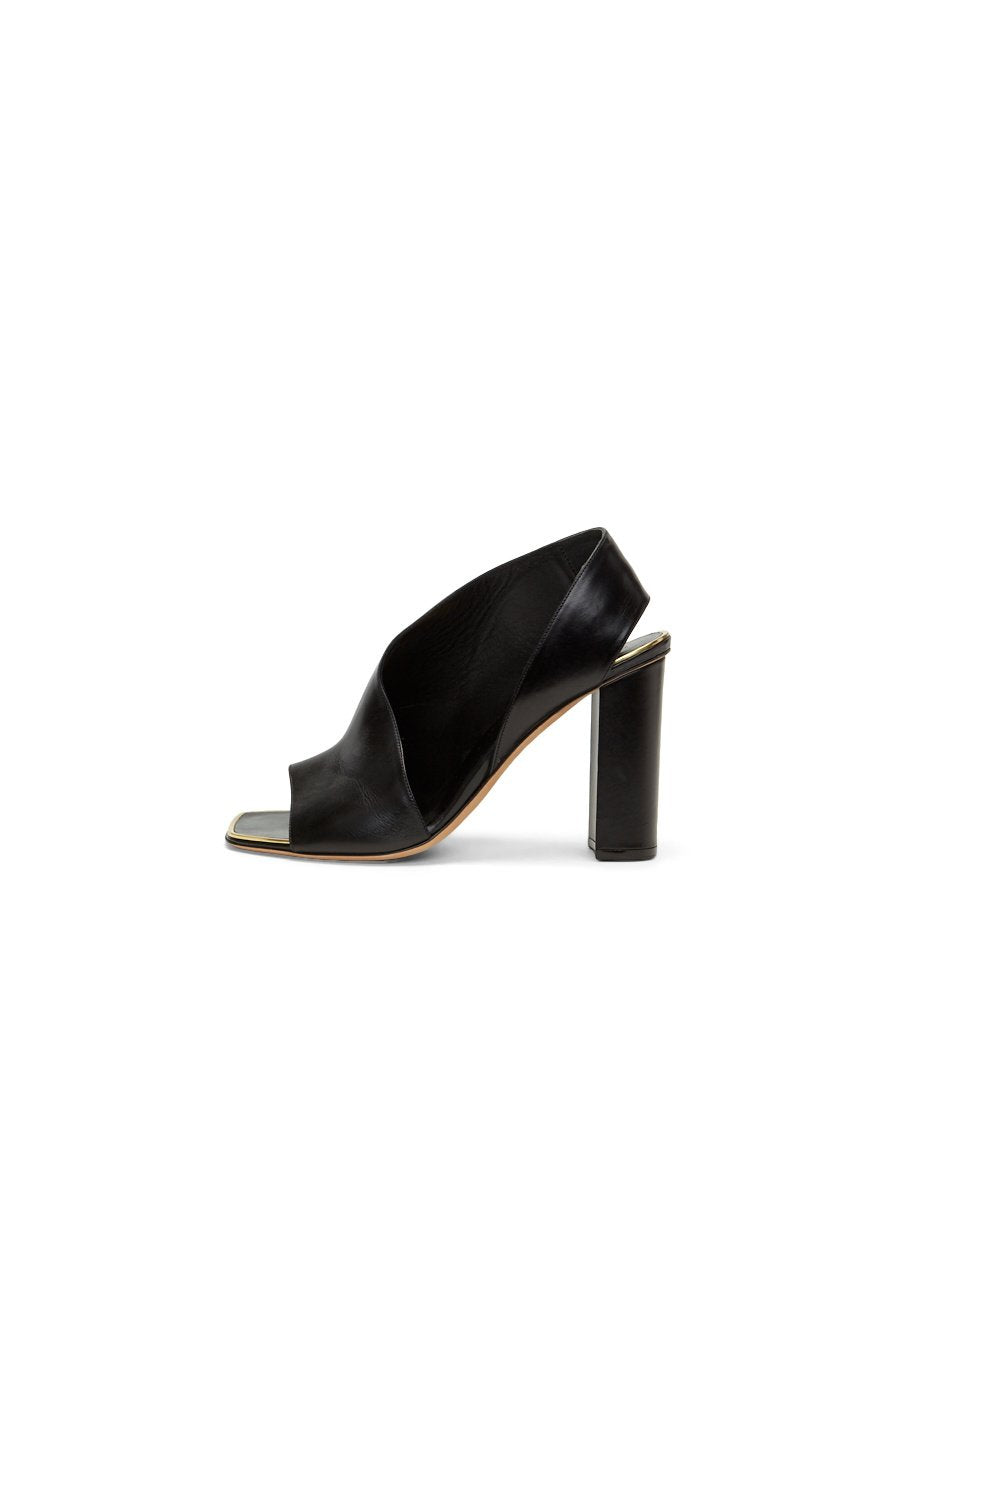 Celine Black Leather Asymmetrical Sandal 100mm - 40